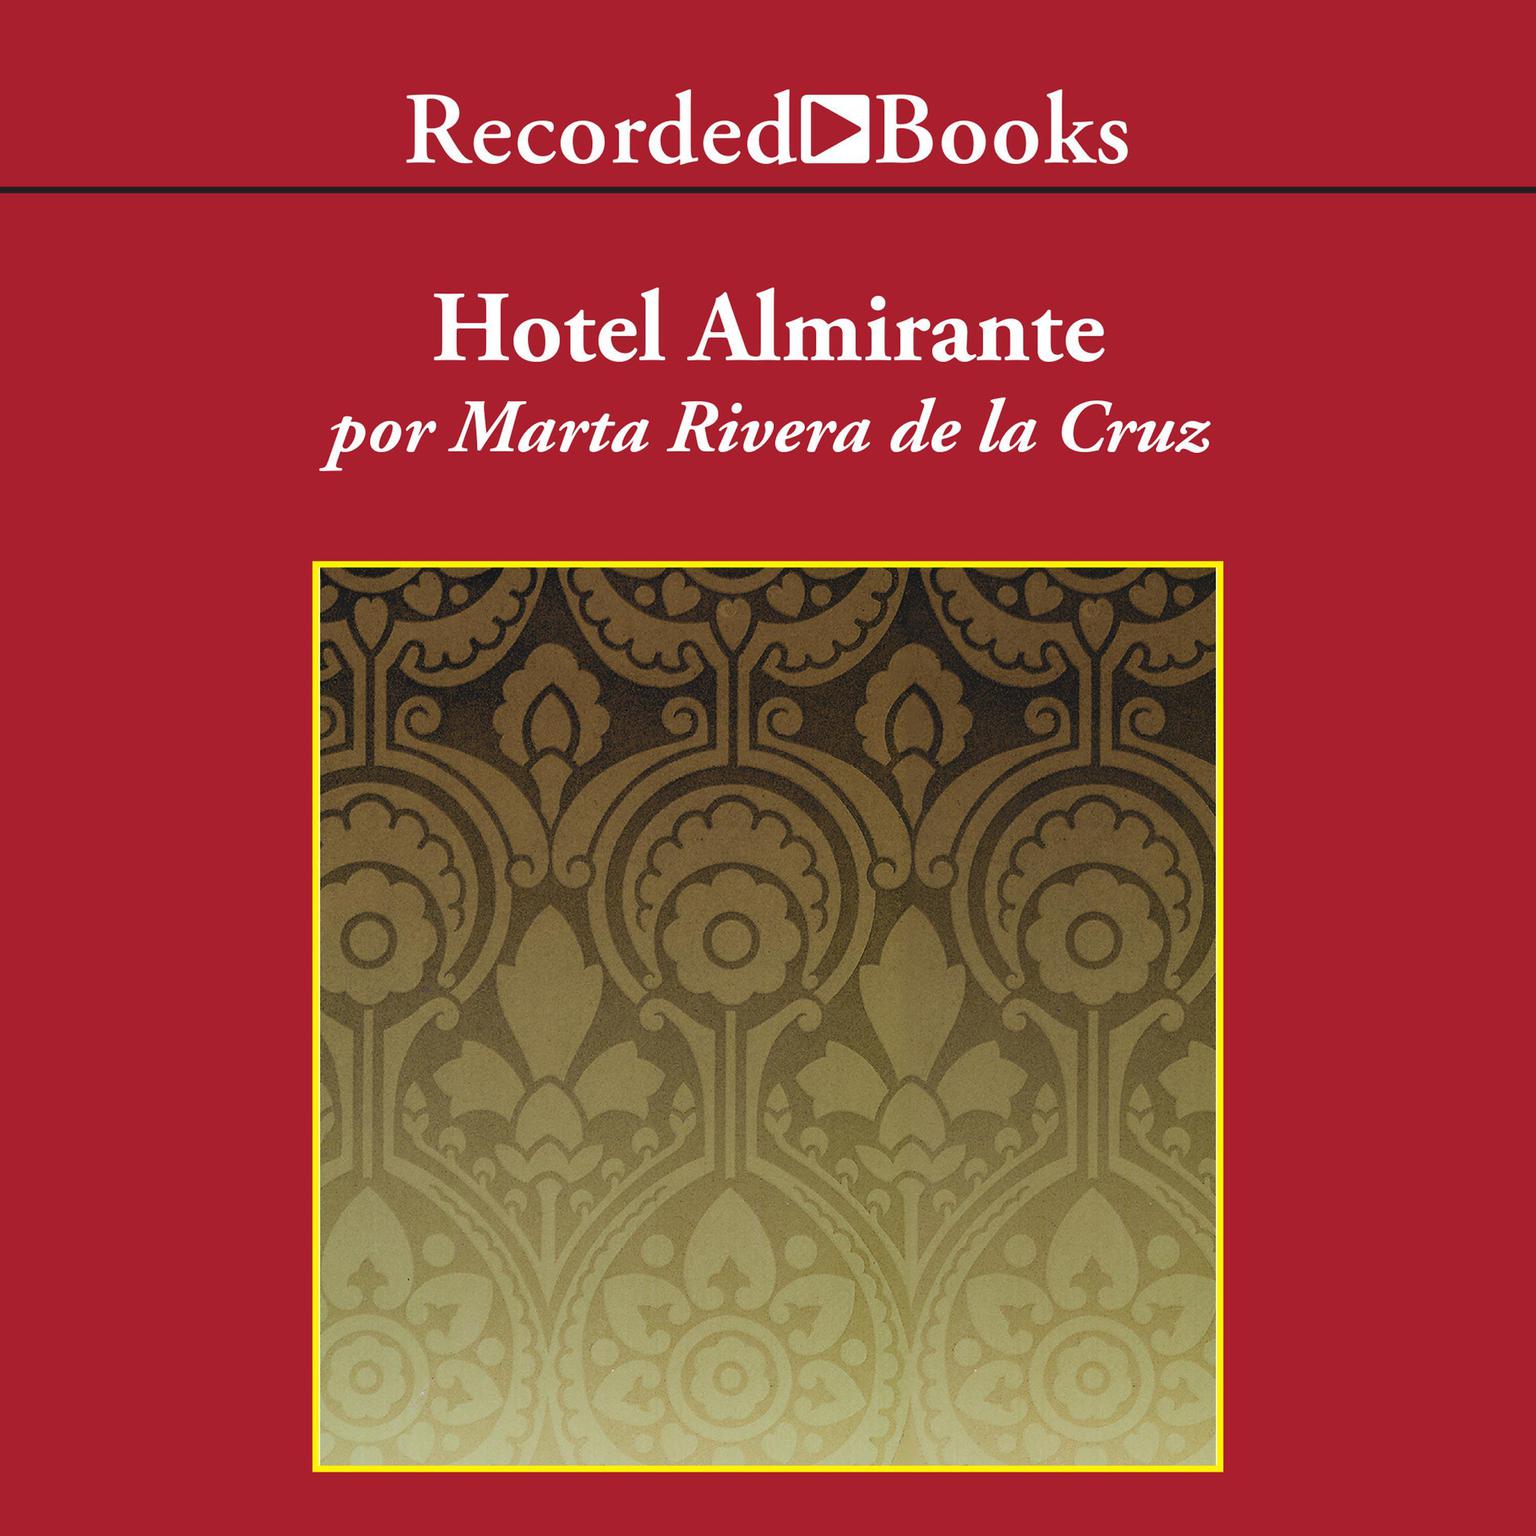 Hotel Almirante (Hotel Admiral) Audiobook, by Marta Rivera De La Cruz